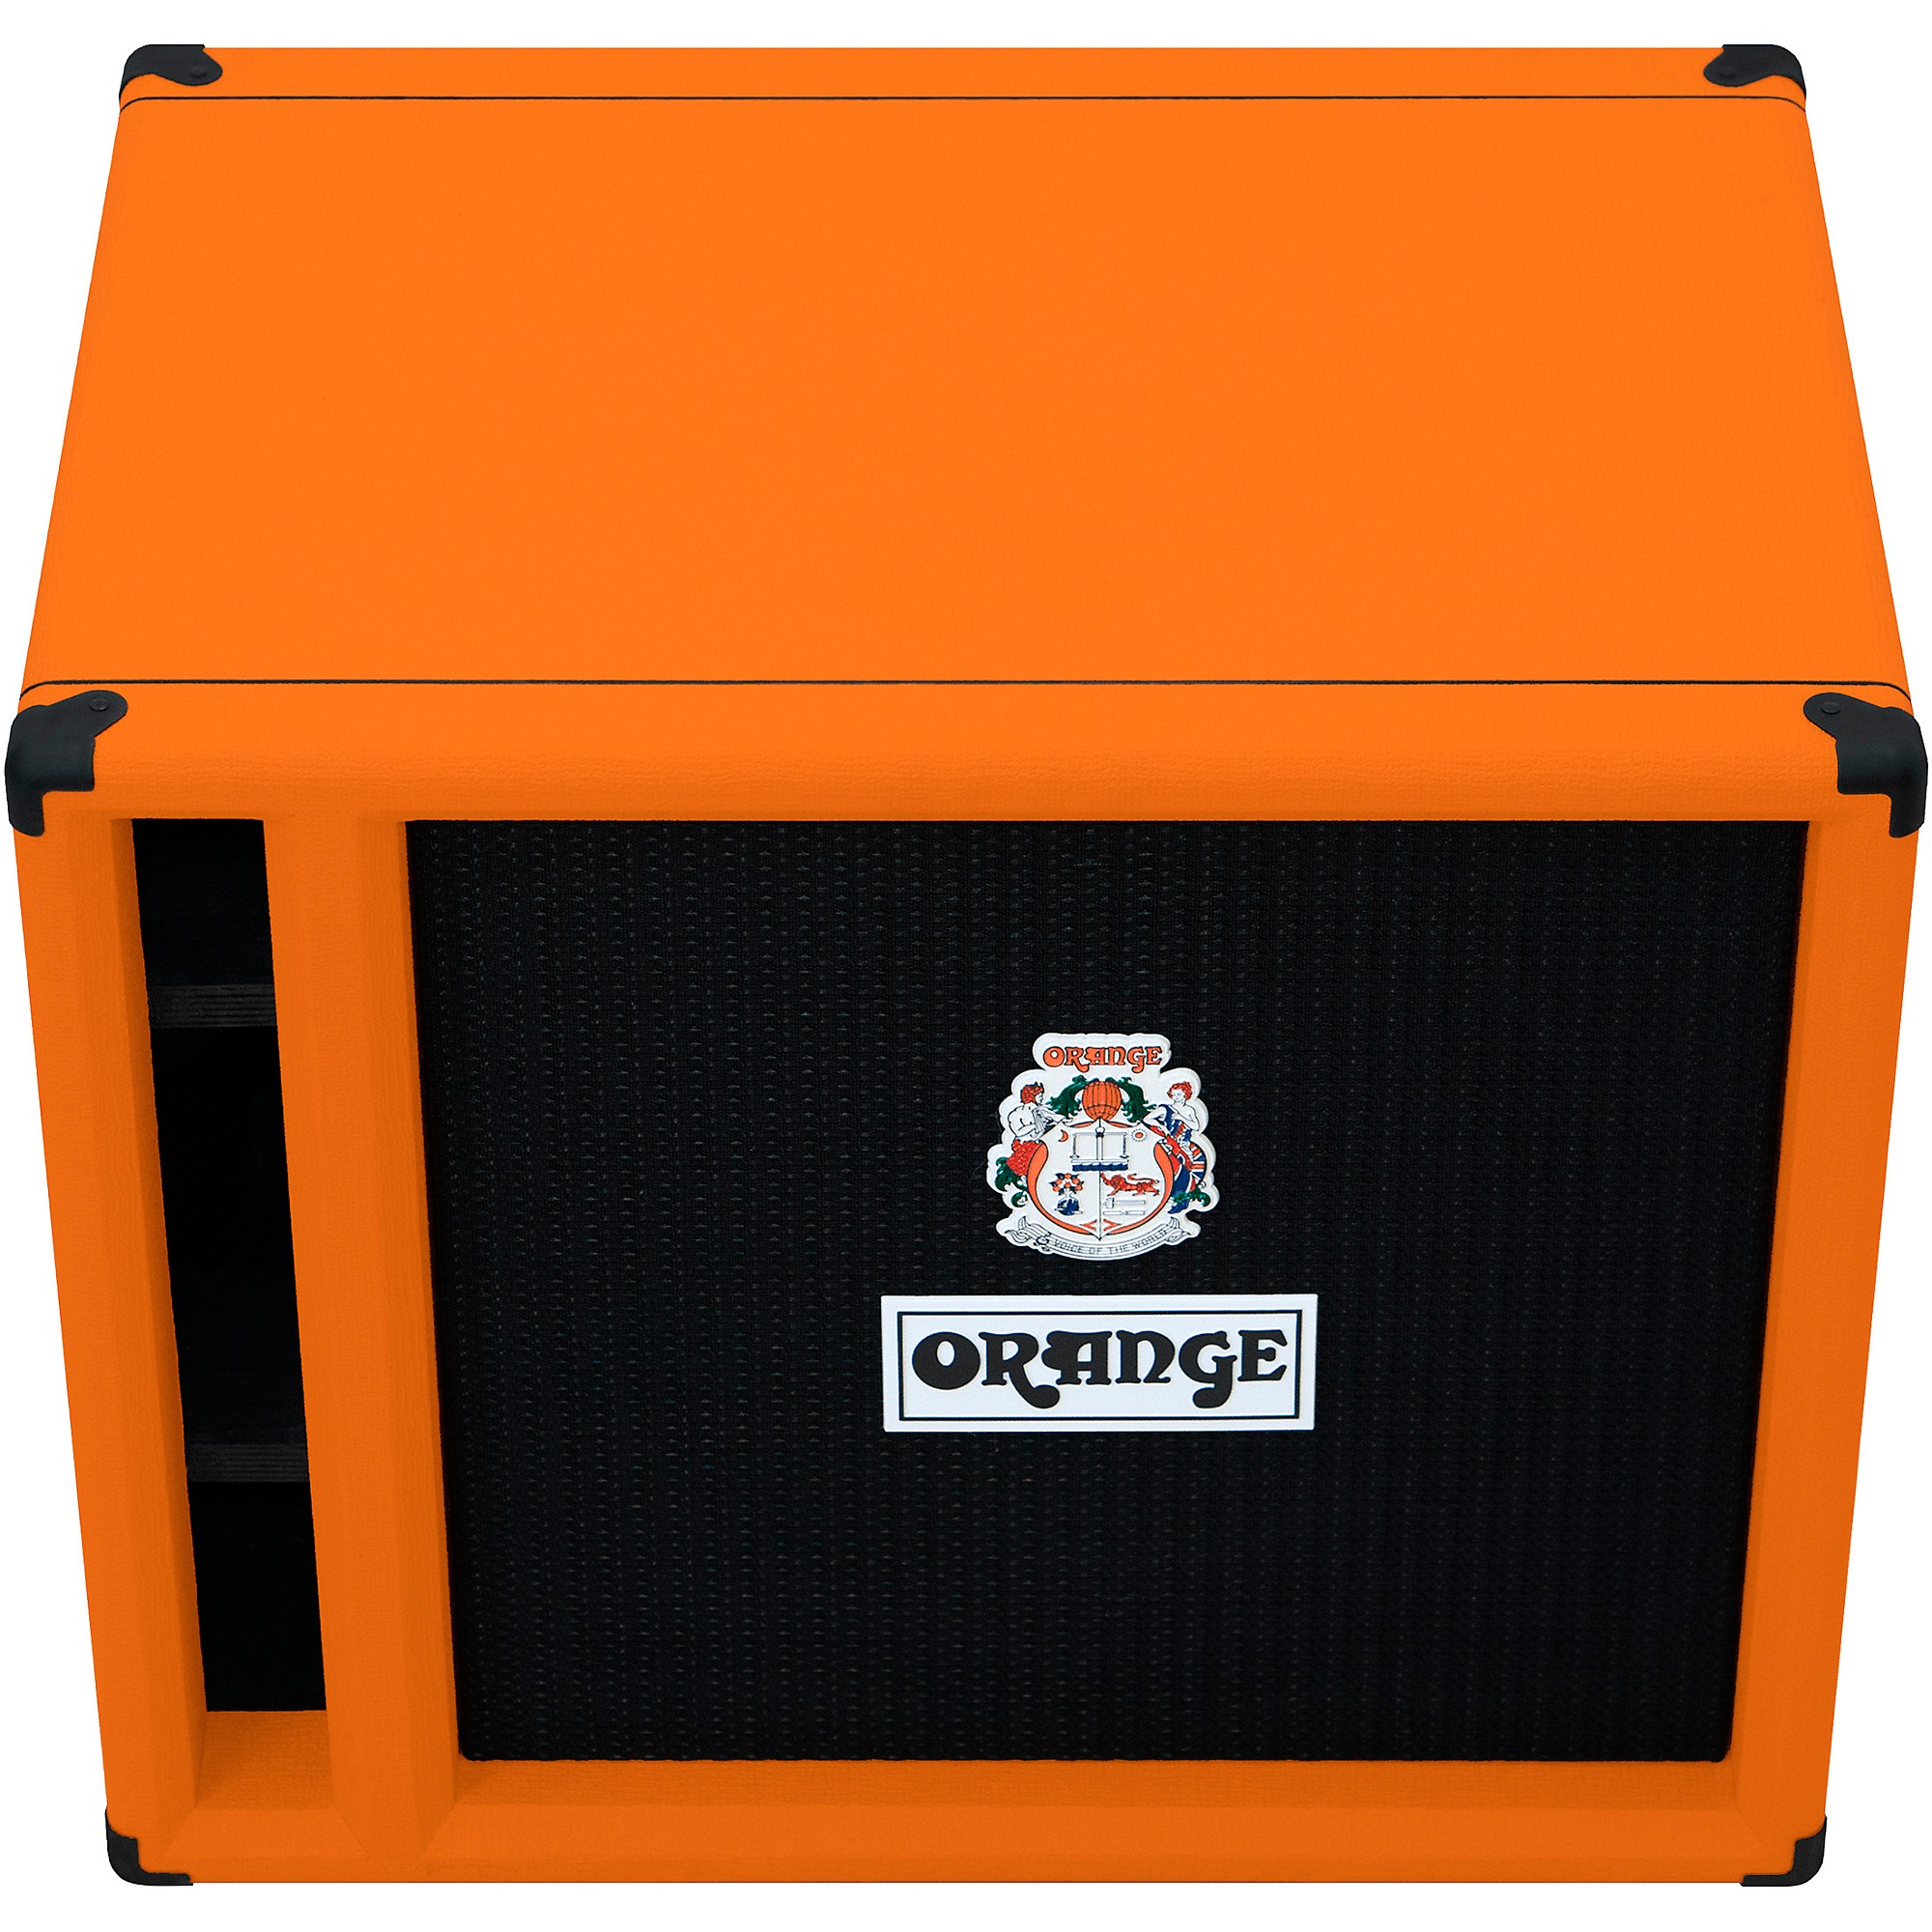 Orange Amplifiers OBC Series OBC115 400W 1x15 Bass Speaker Cabinet